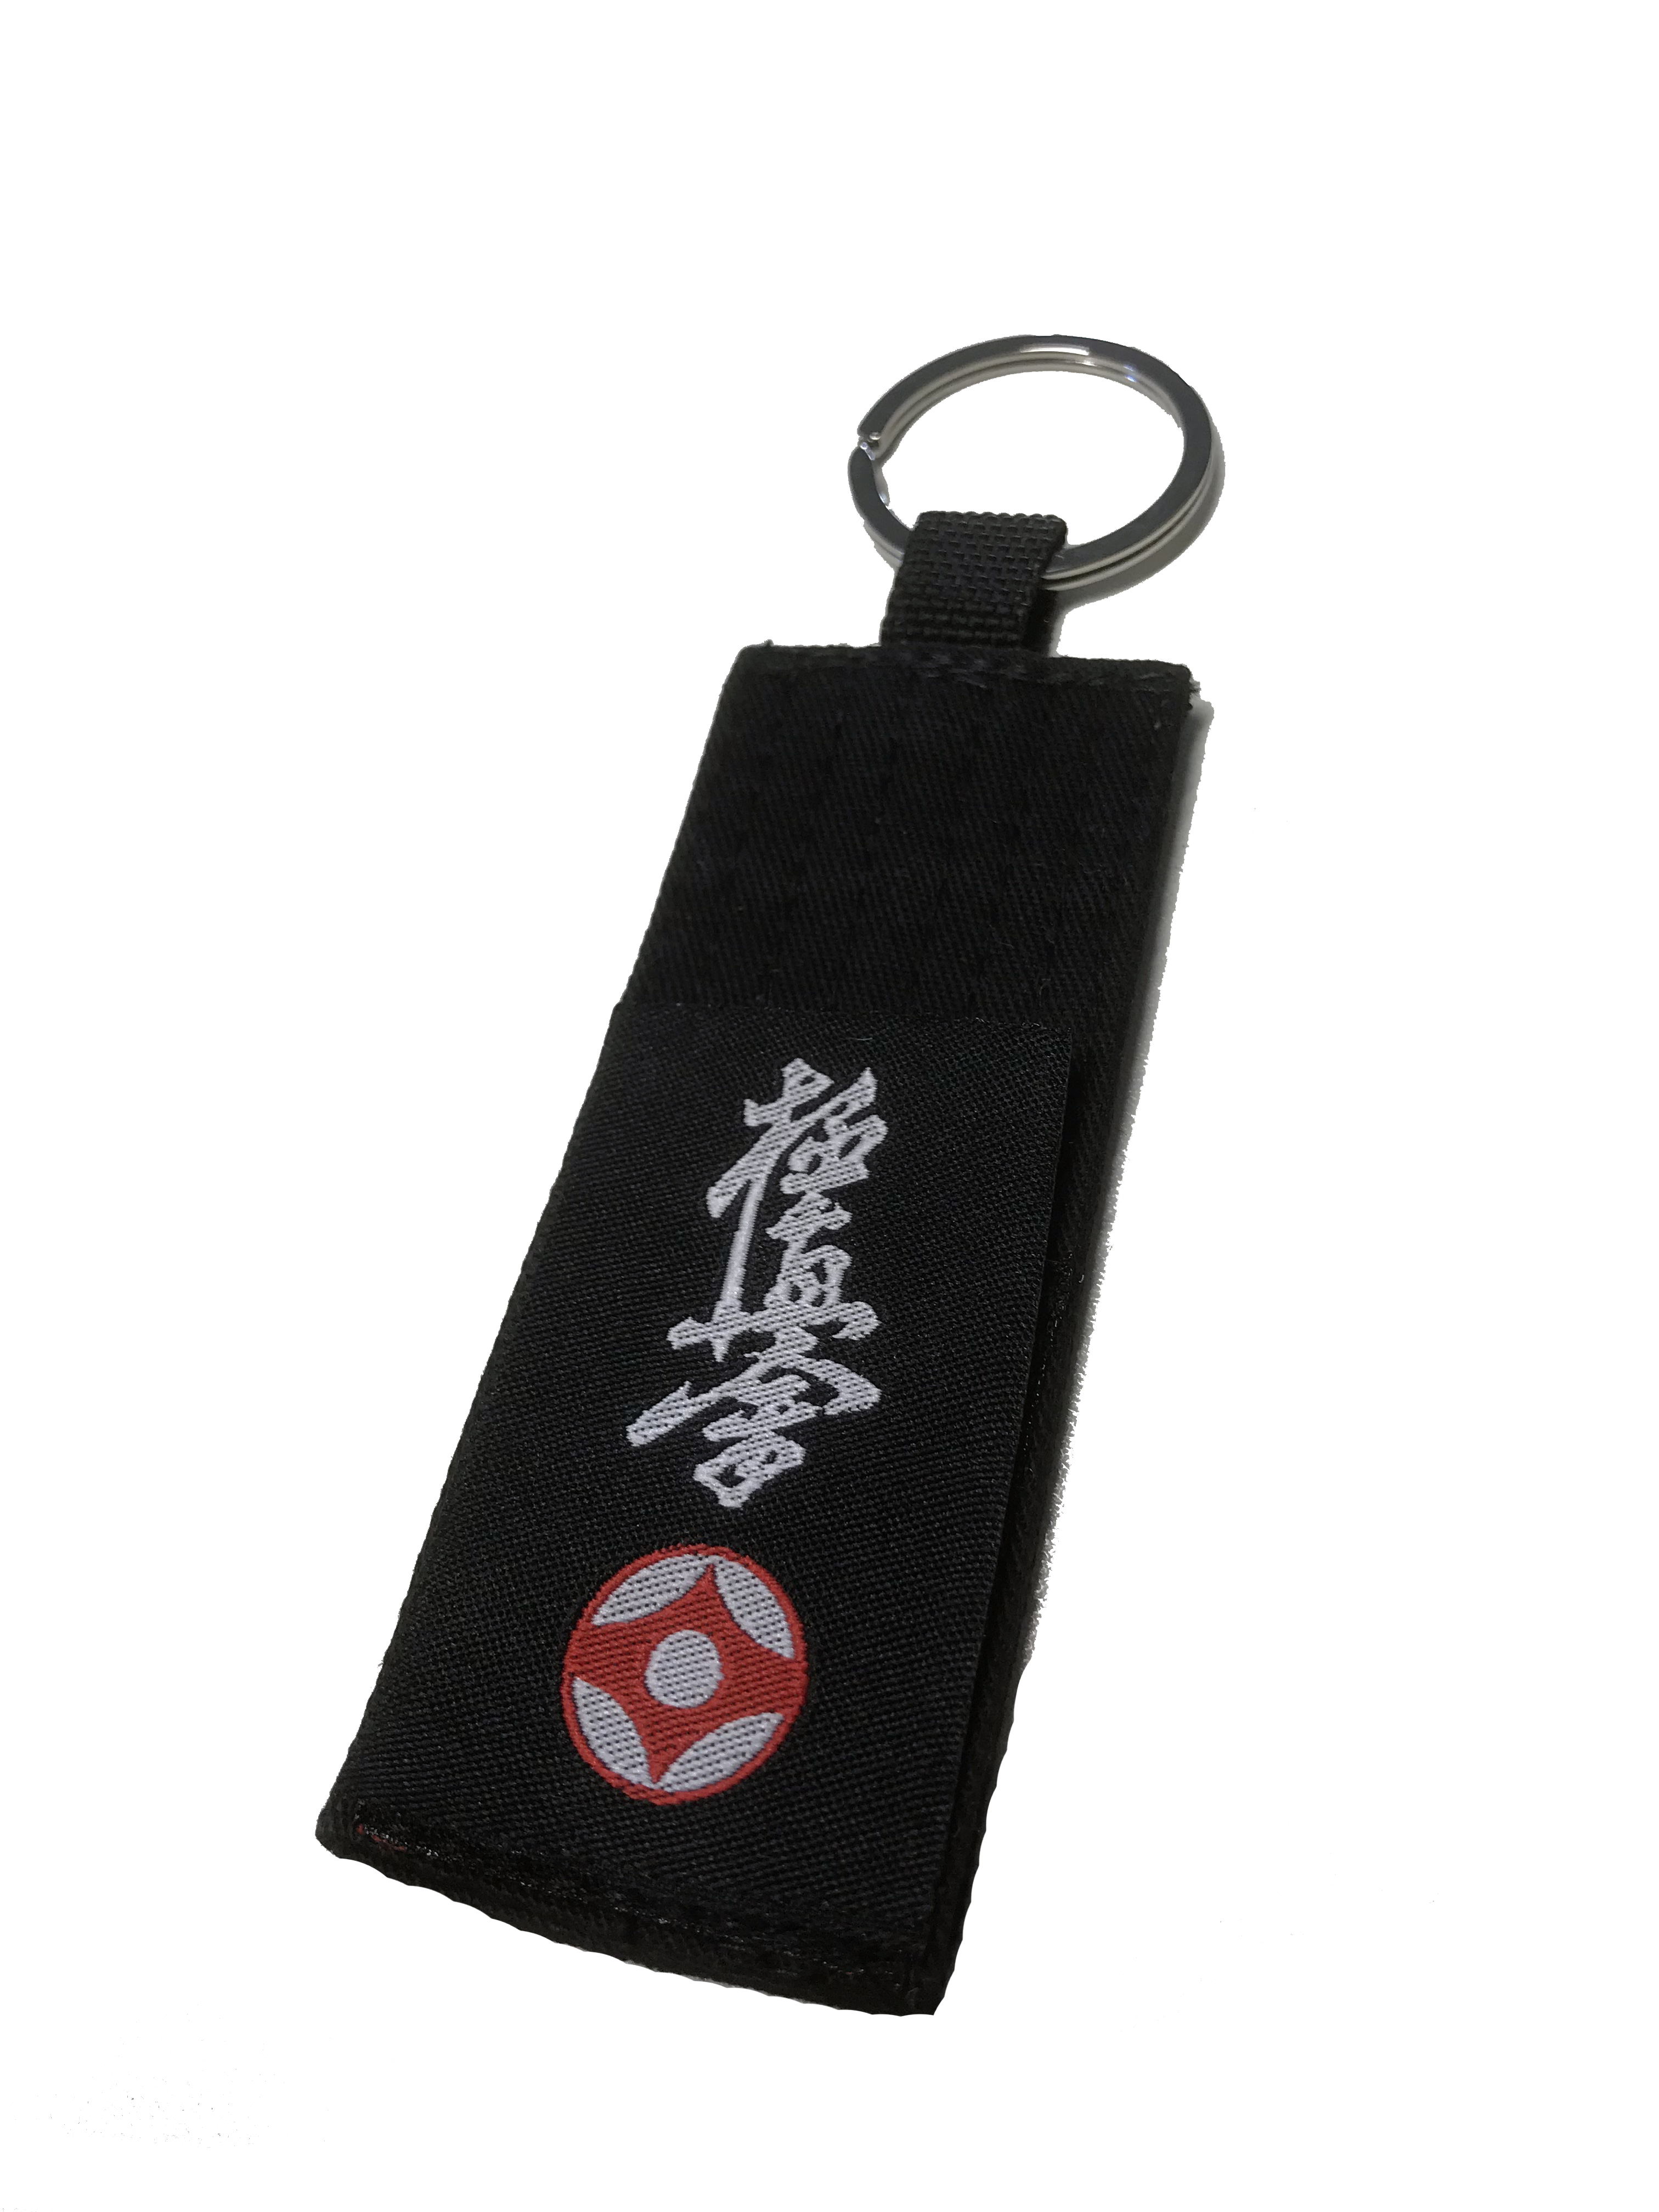 Schlüsselanhänger Schwarzgurt Kyokushinkai